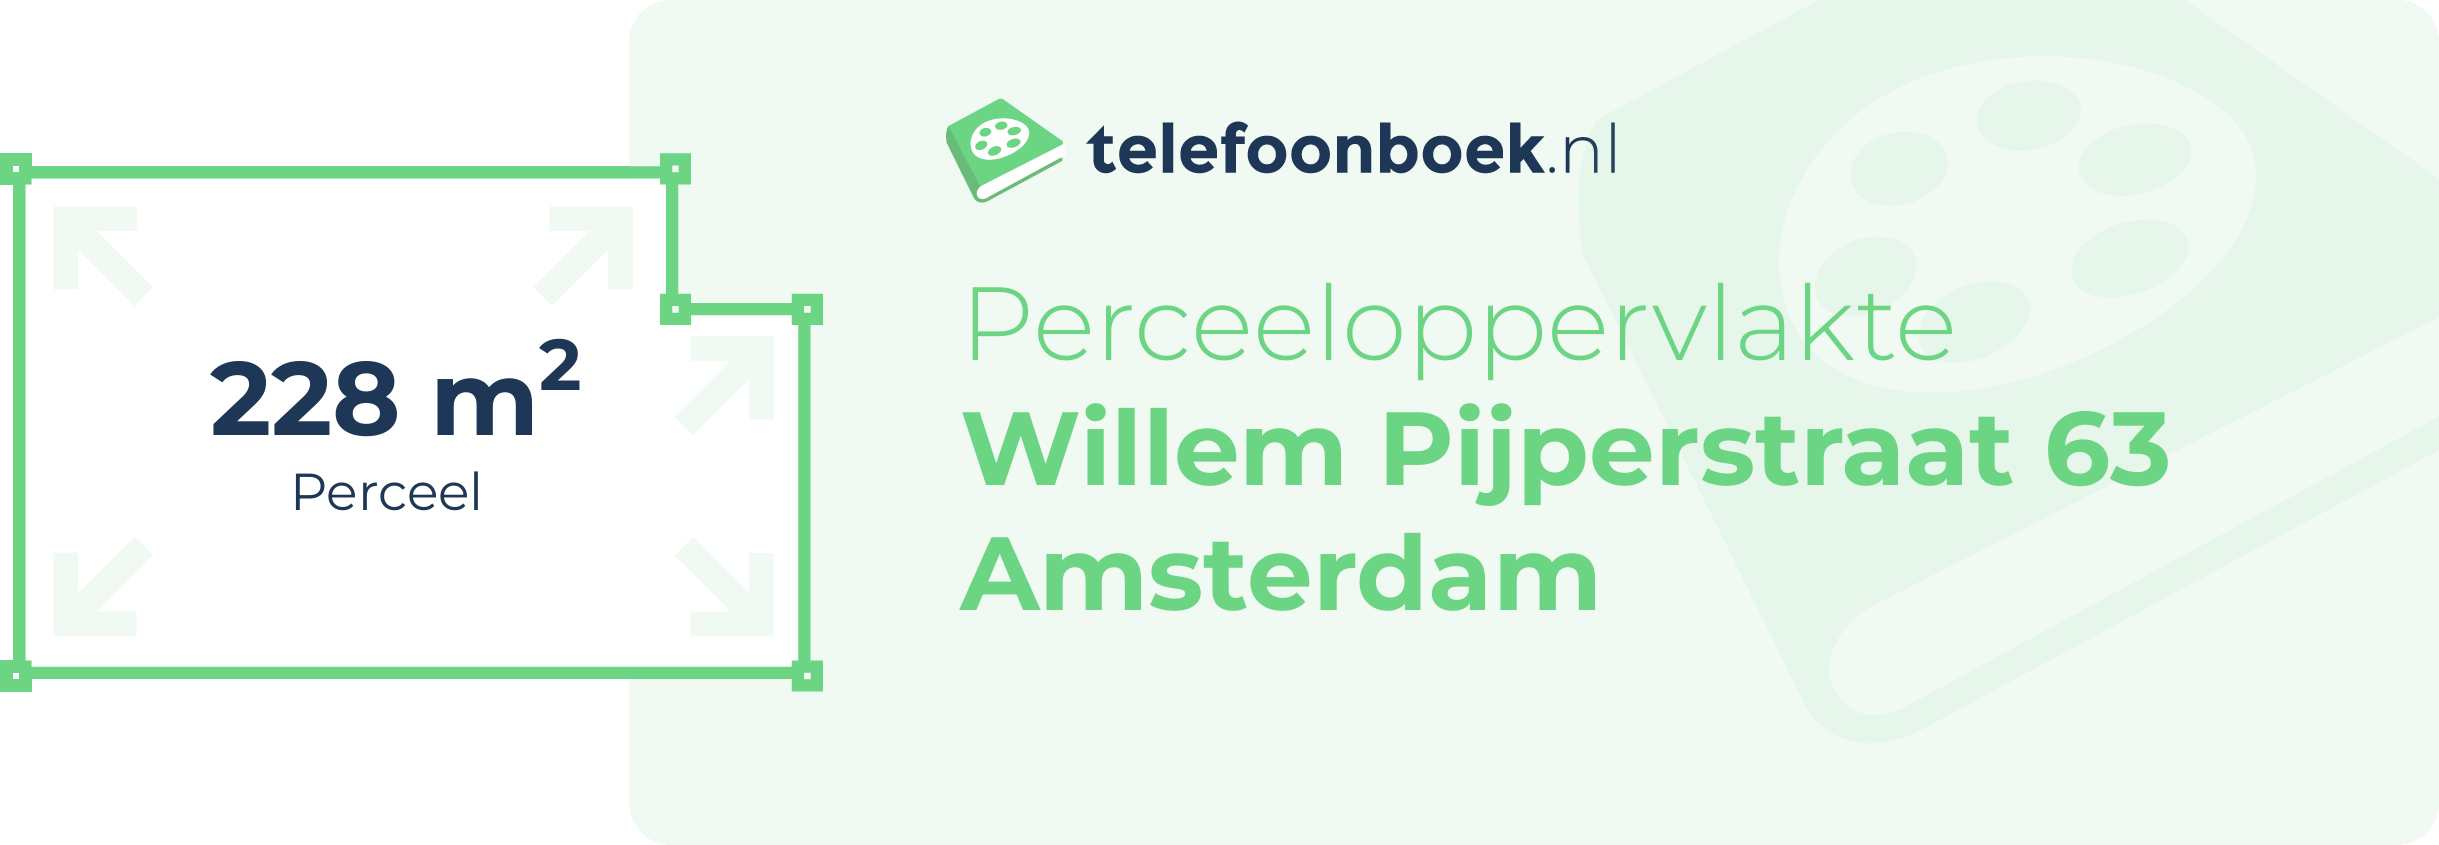 Perceeloppervlakte Willem Pijperstraat 63 Amsterdam